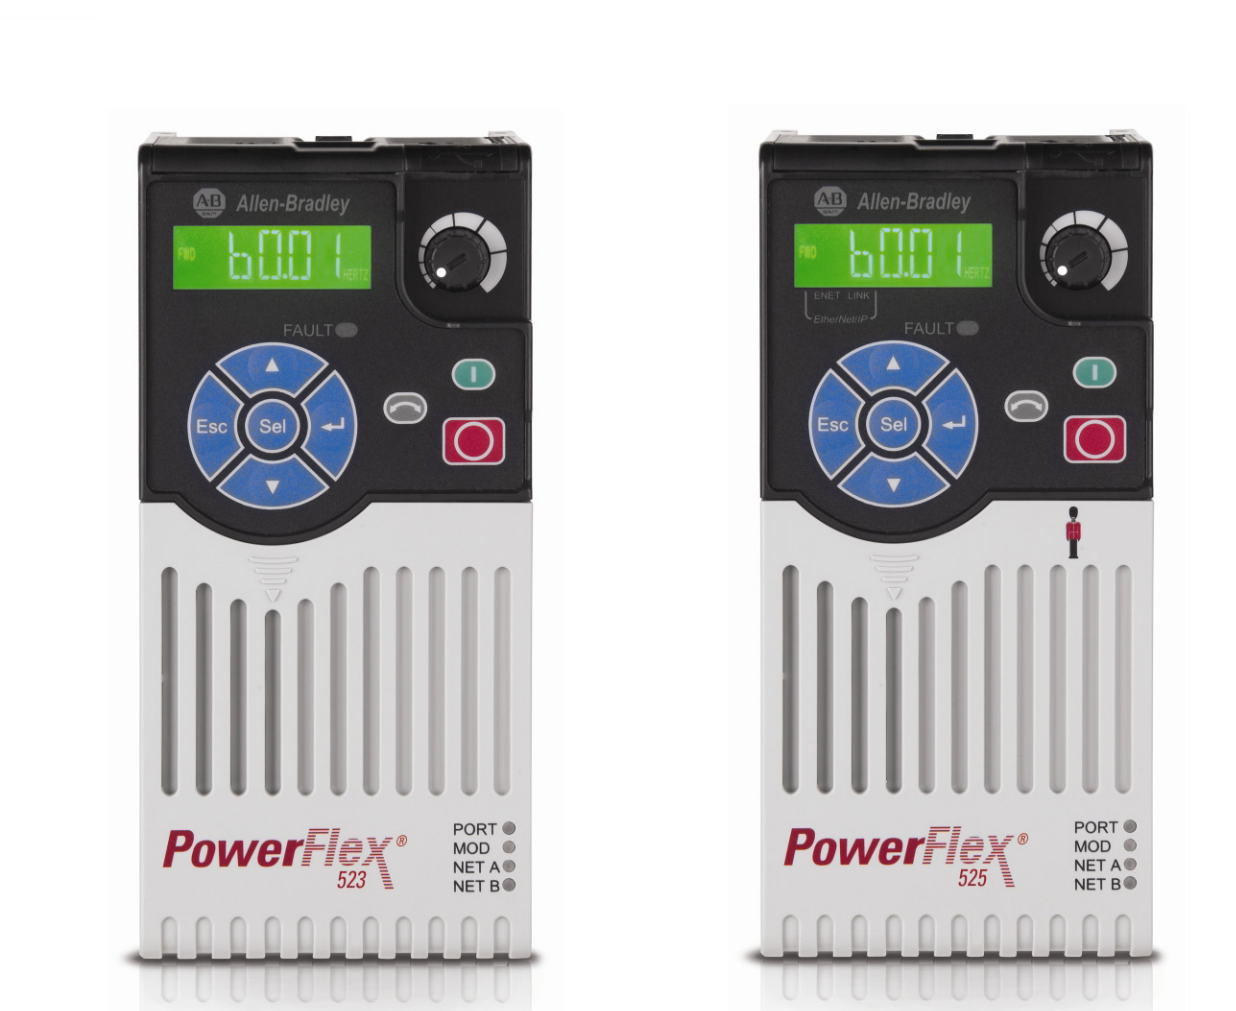 PowerFlex 525 AC Drives